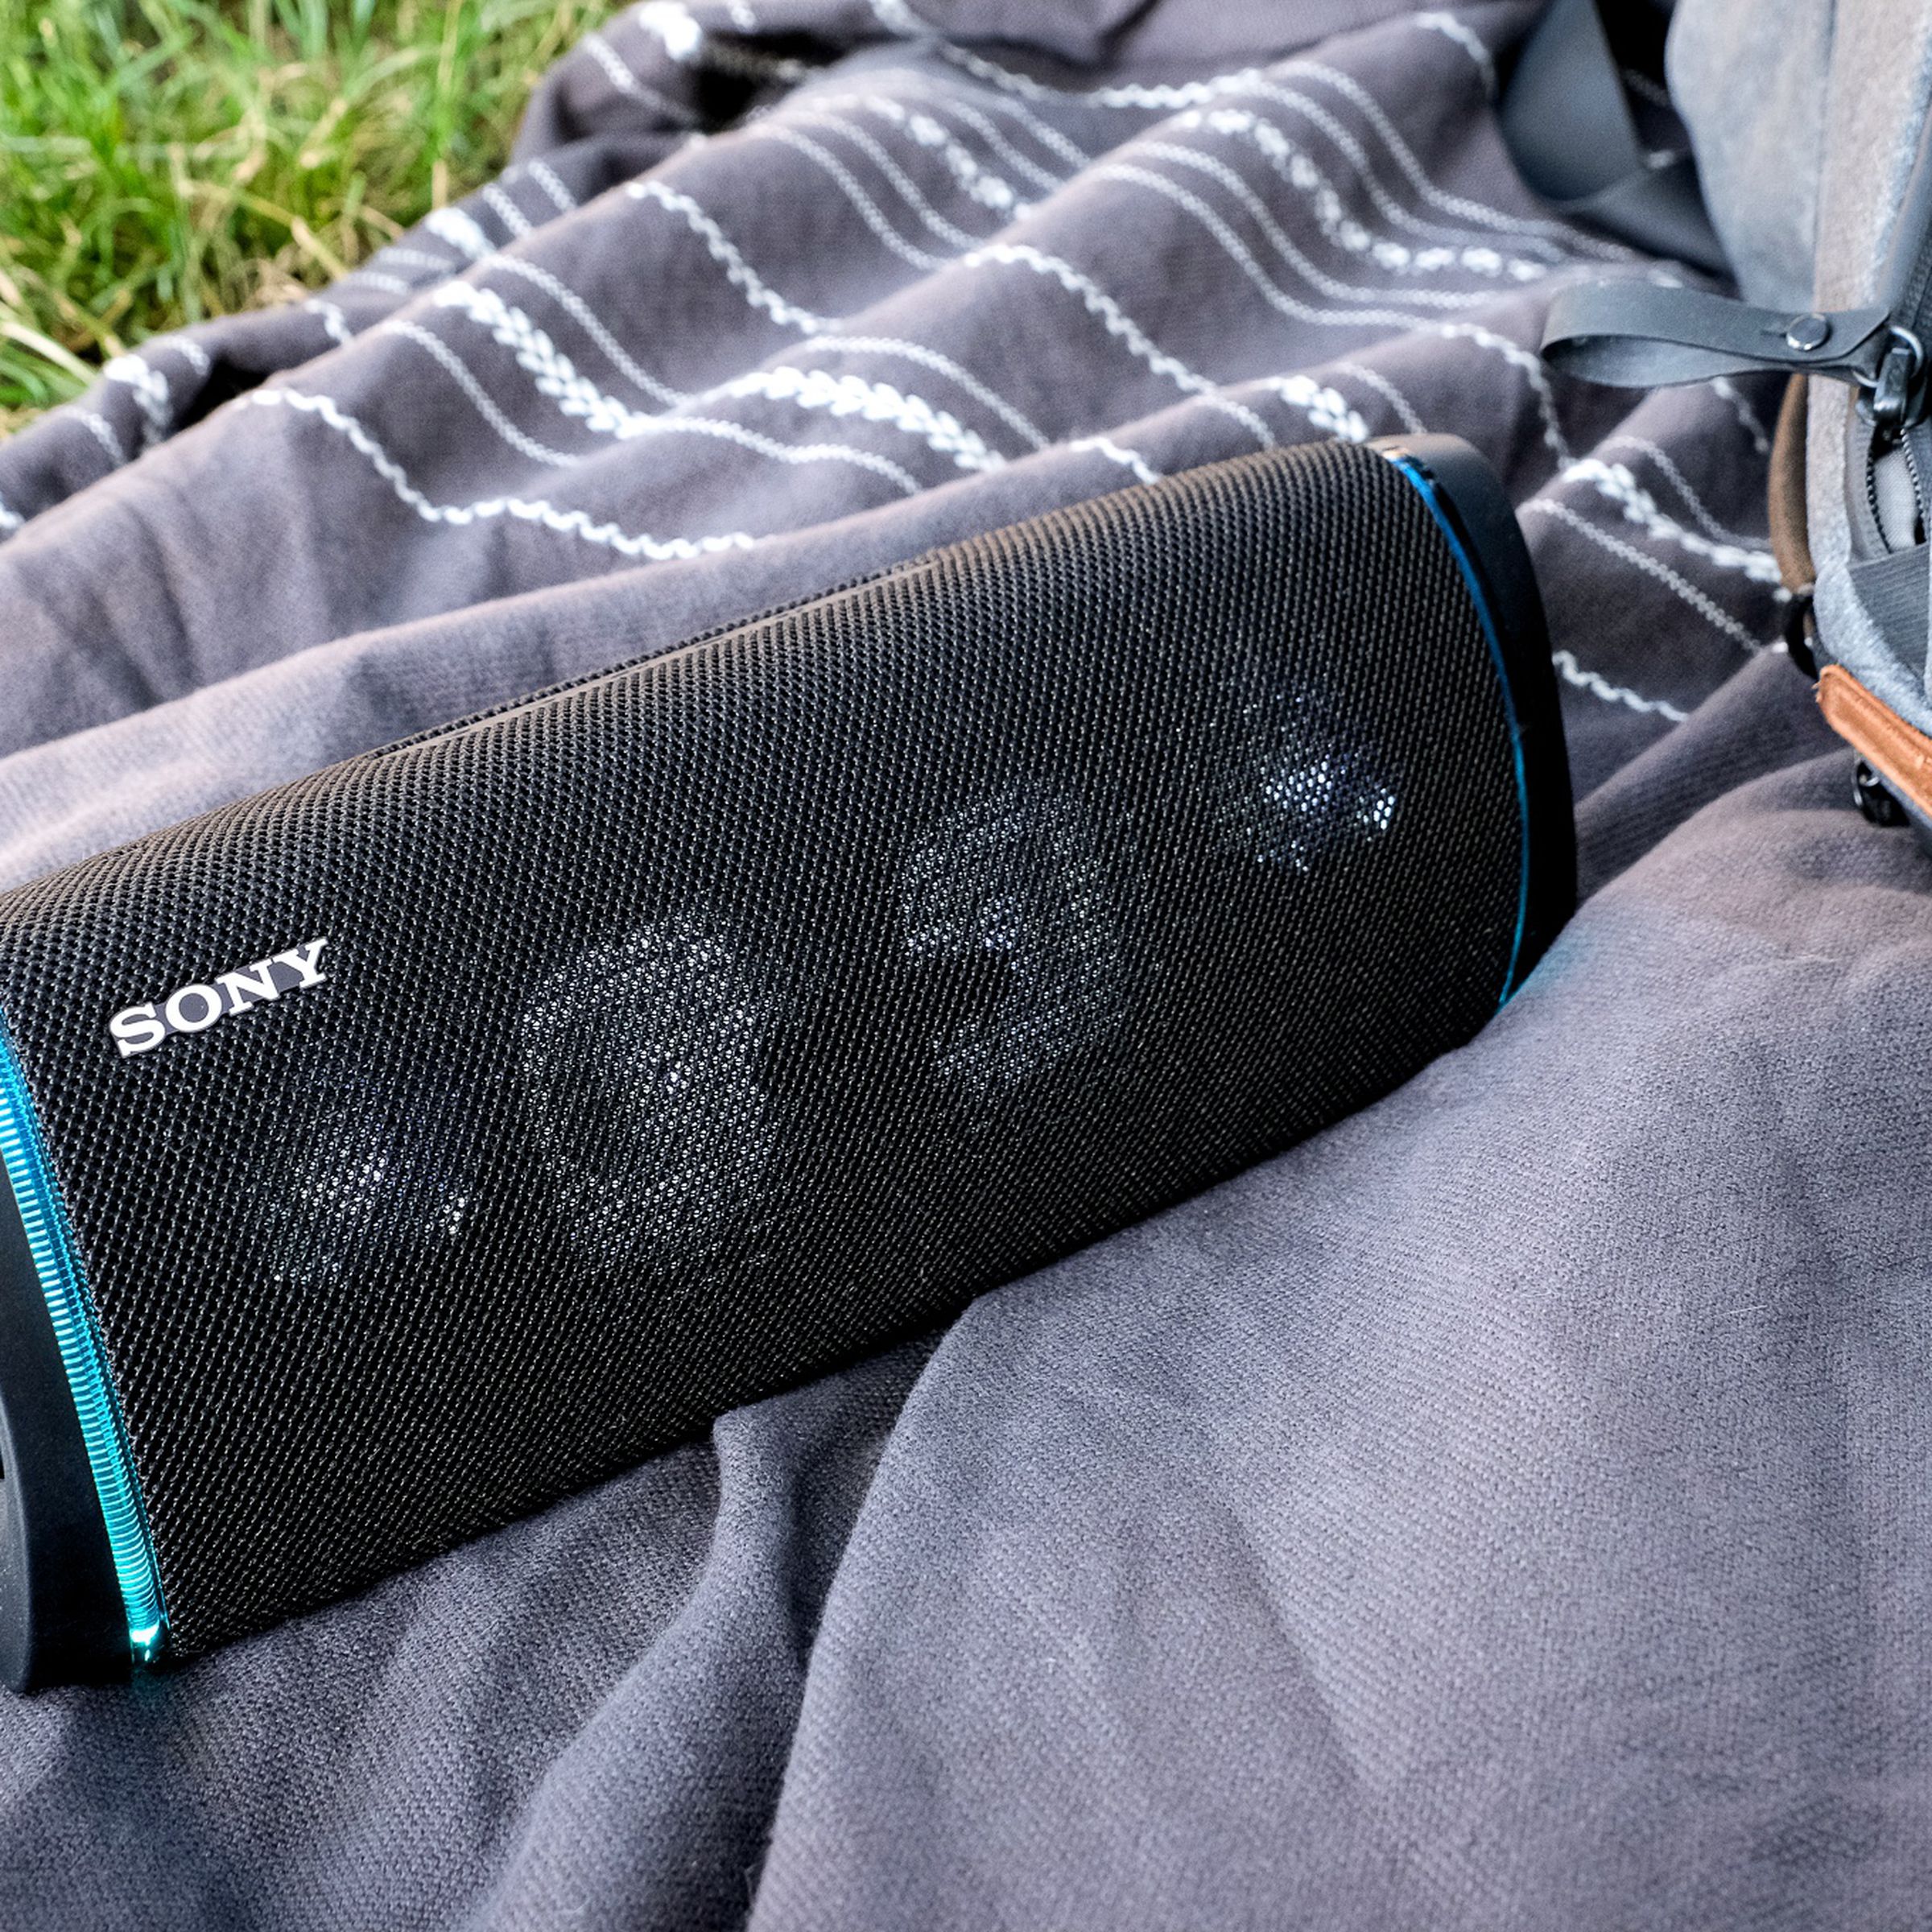 Sony’s SRS-XB43 Bluetooth speaker resting on a blanket outside.